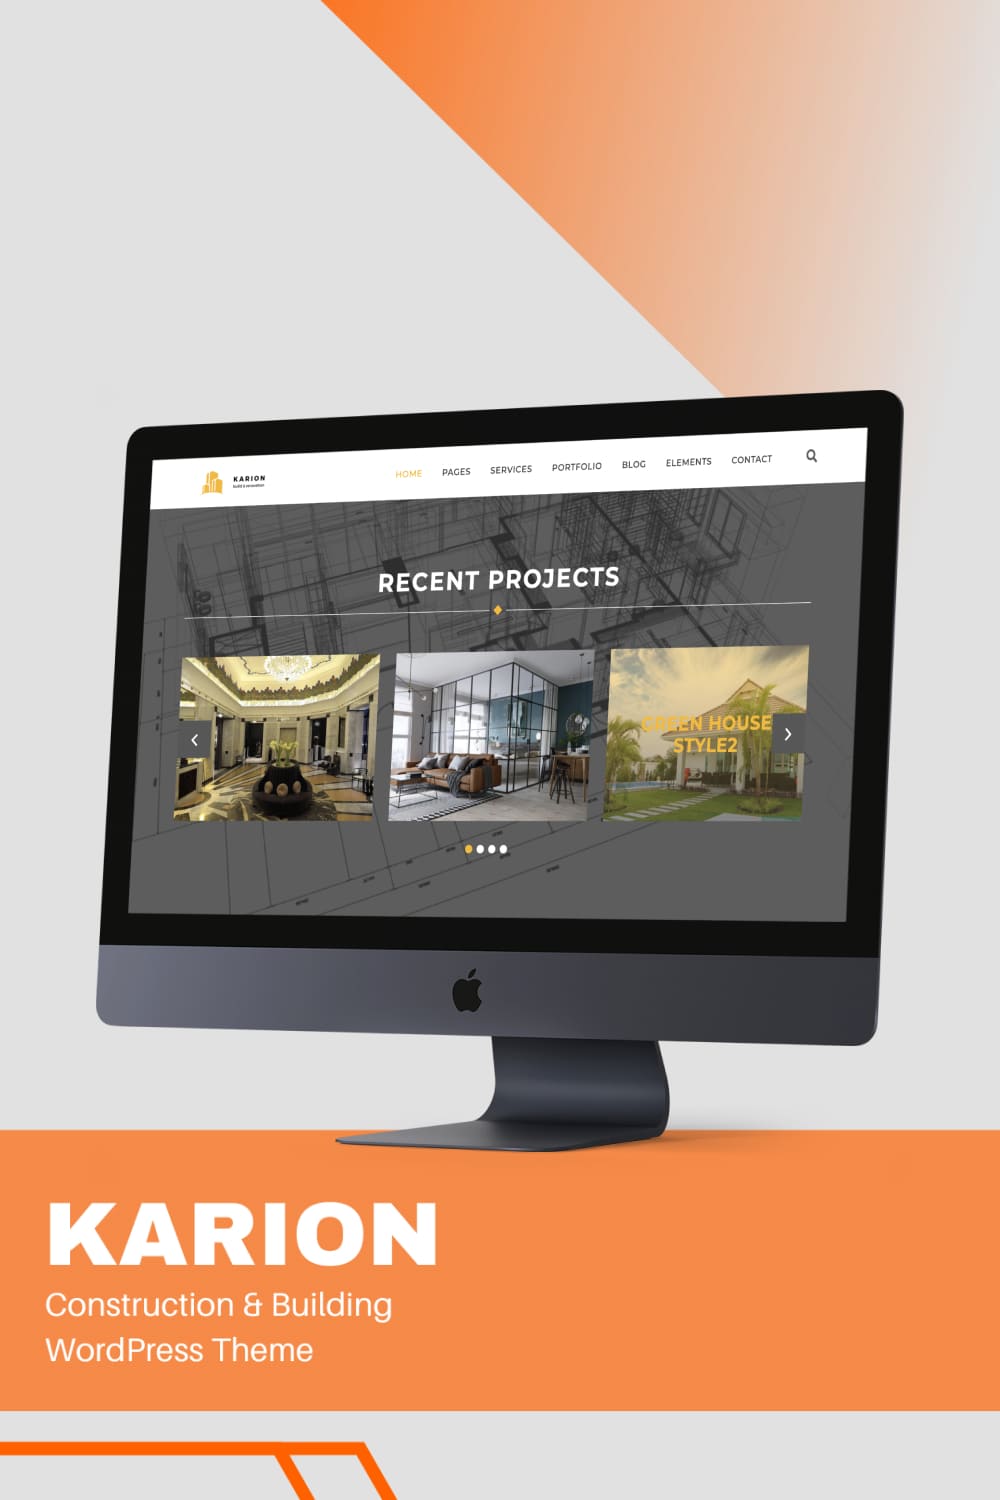 Karion - Construction & Building WordPress Theme - Pinterest.